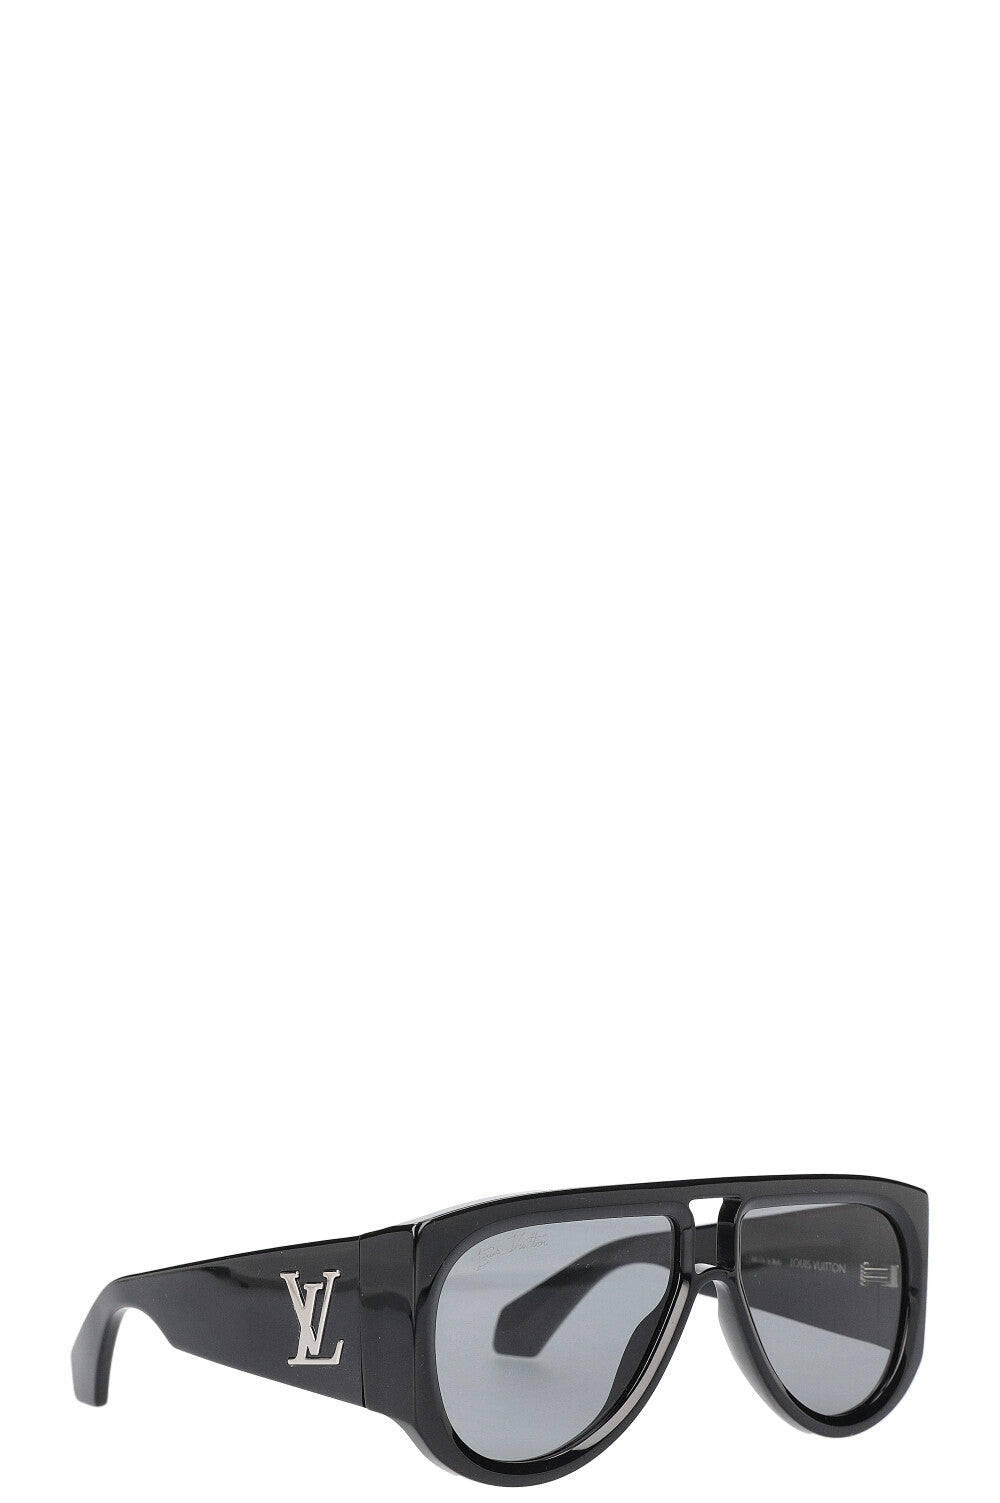 Selby sunglasses Louis Vuitton Black in Plastic - 31399950